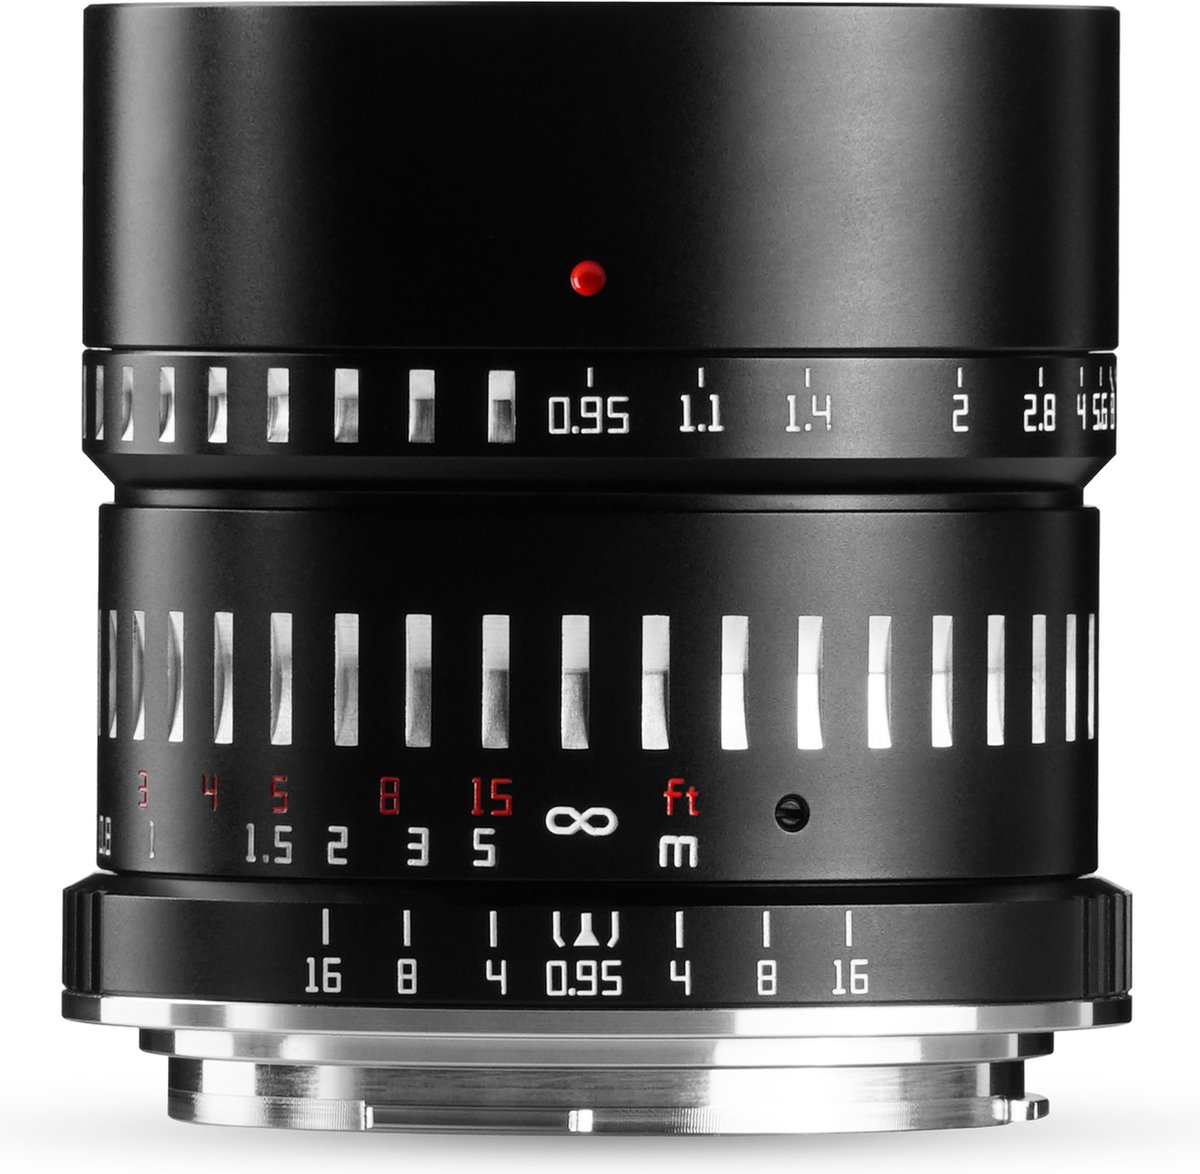 TT Artisan - Cameralens - 50mm F/0.95 APS-C for Leica/sigma L-mount, black + silver